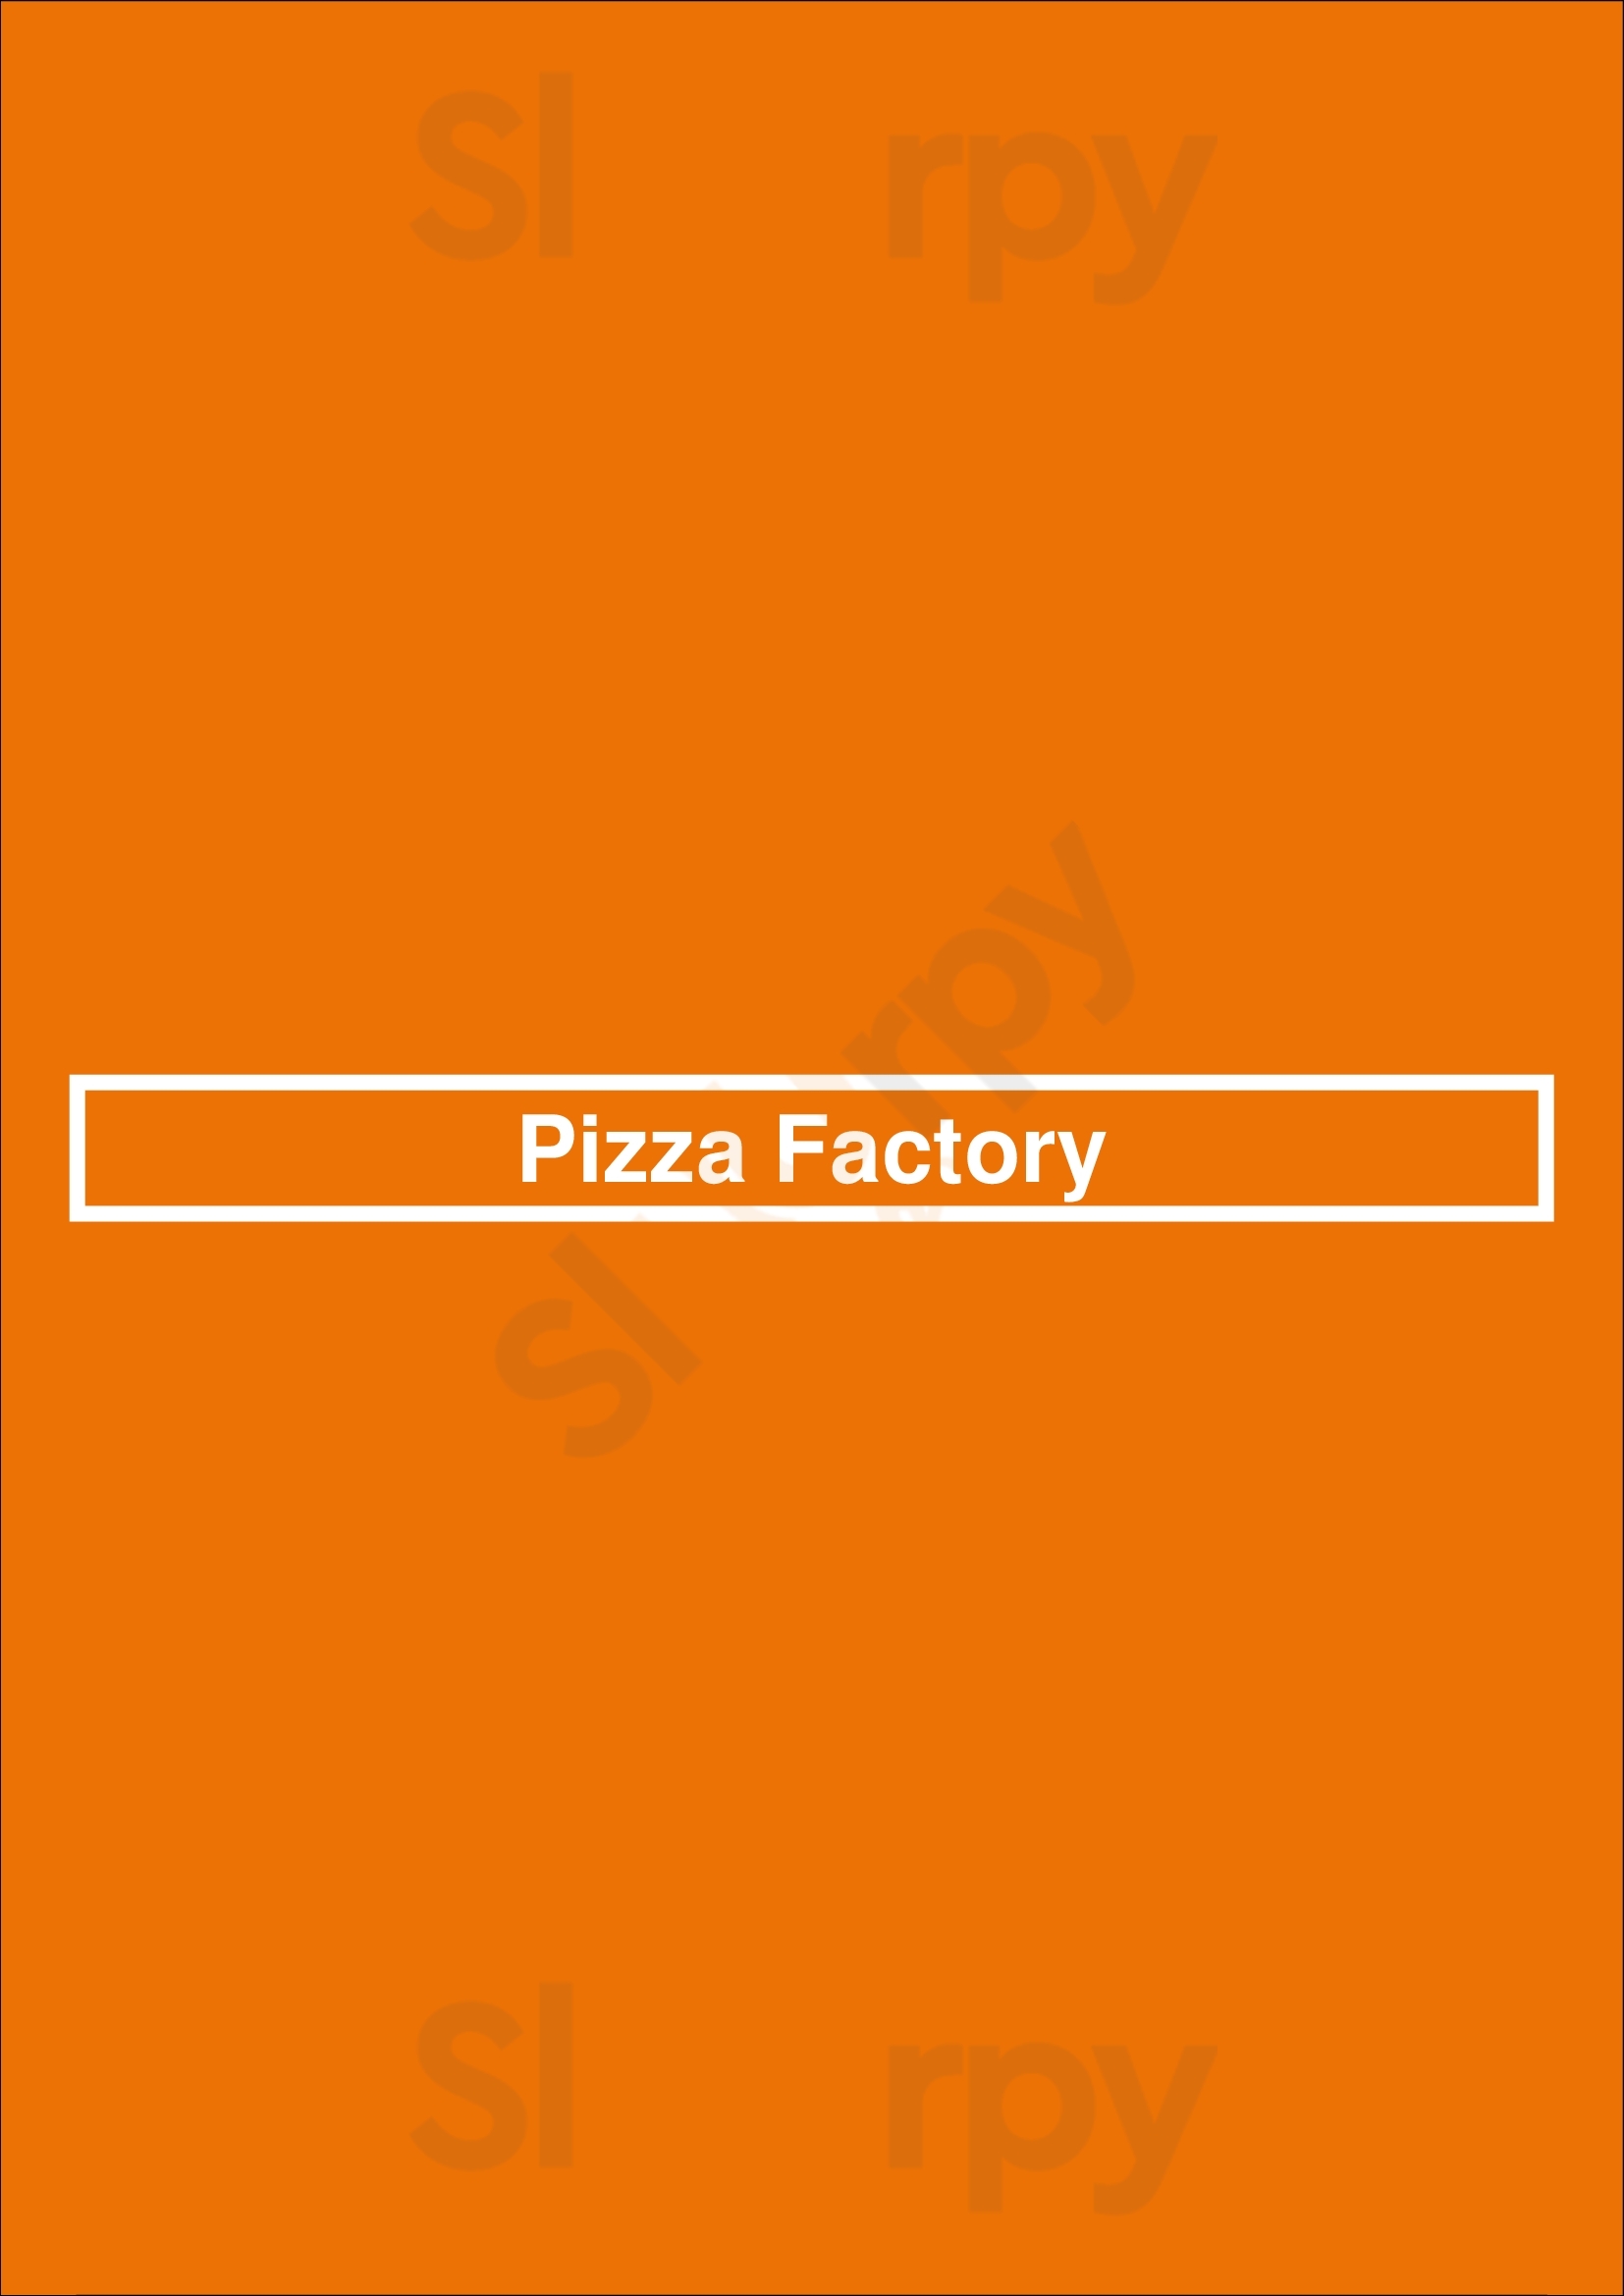 Pizza Factory Langley City Menu - 1